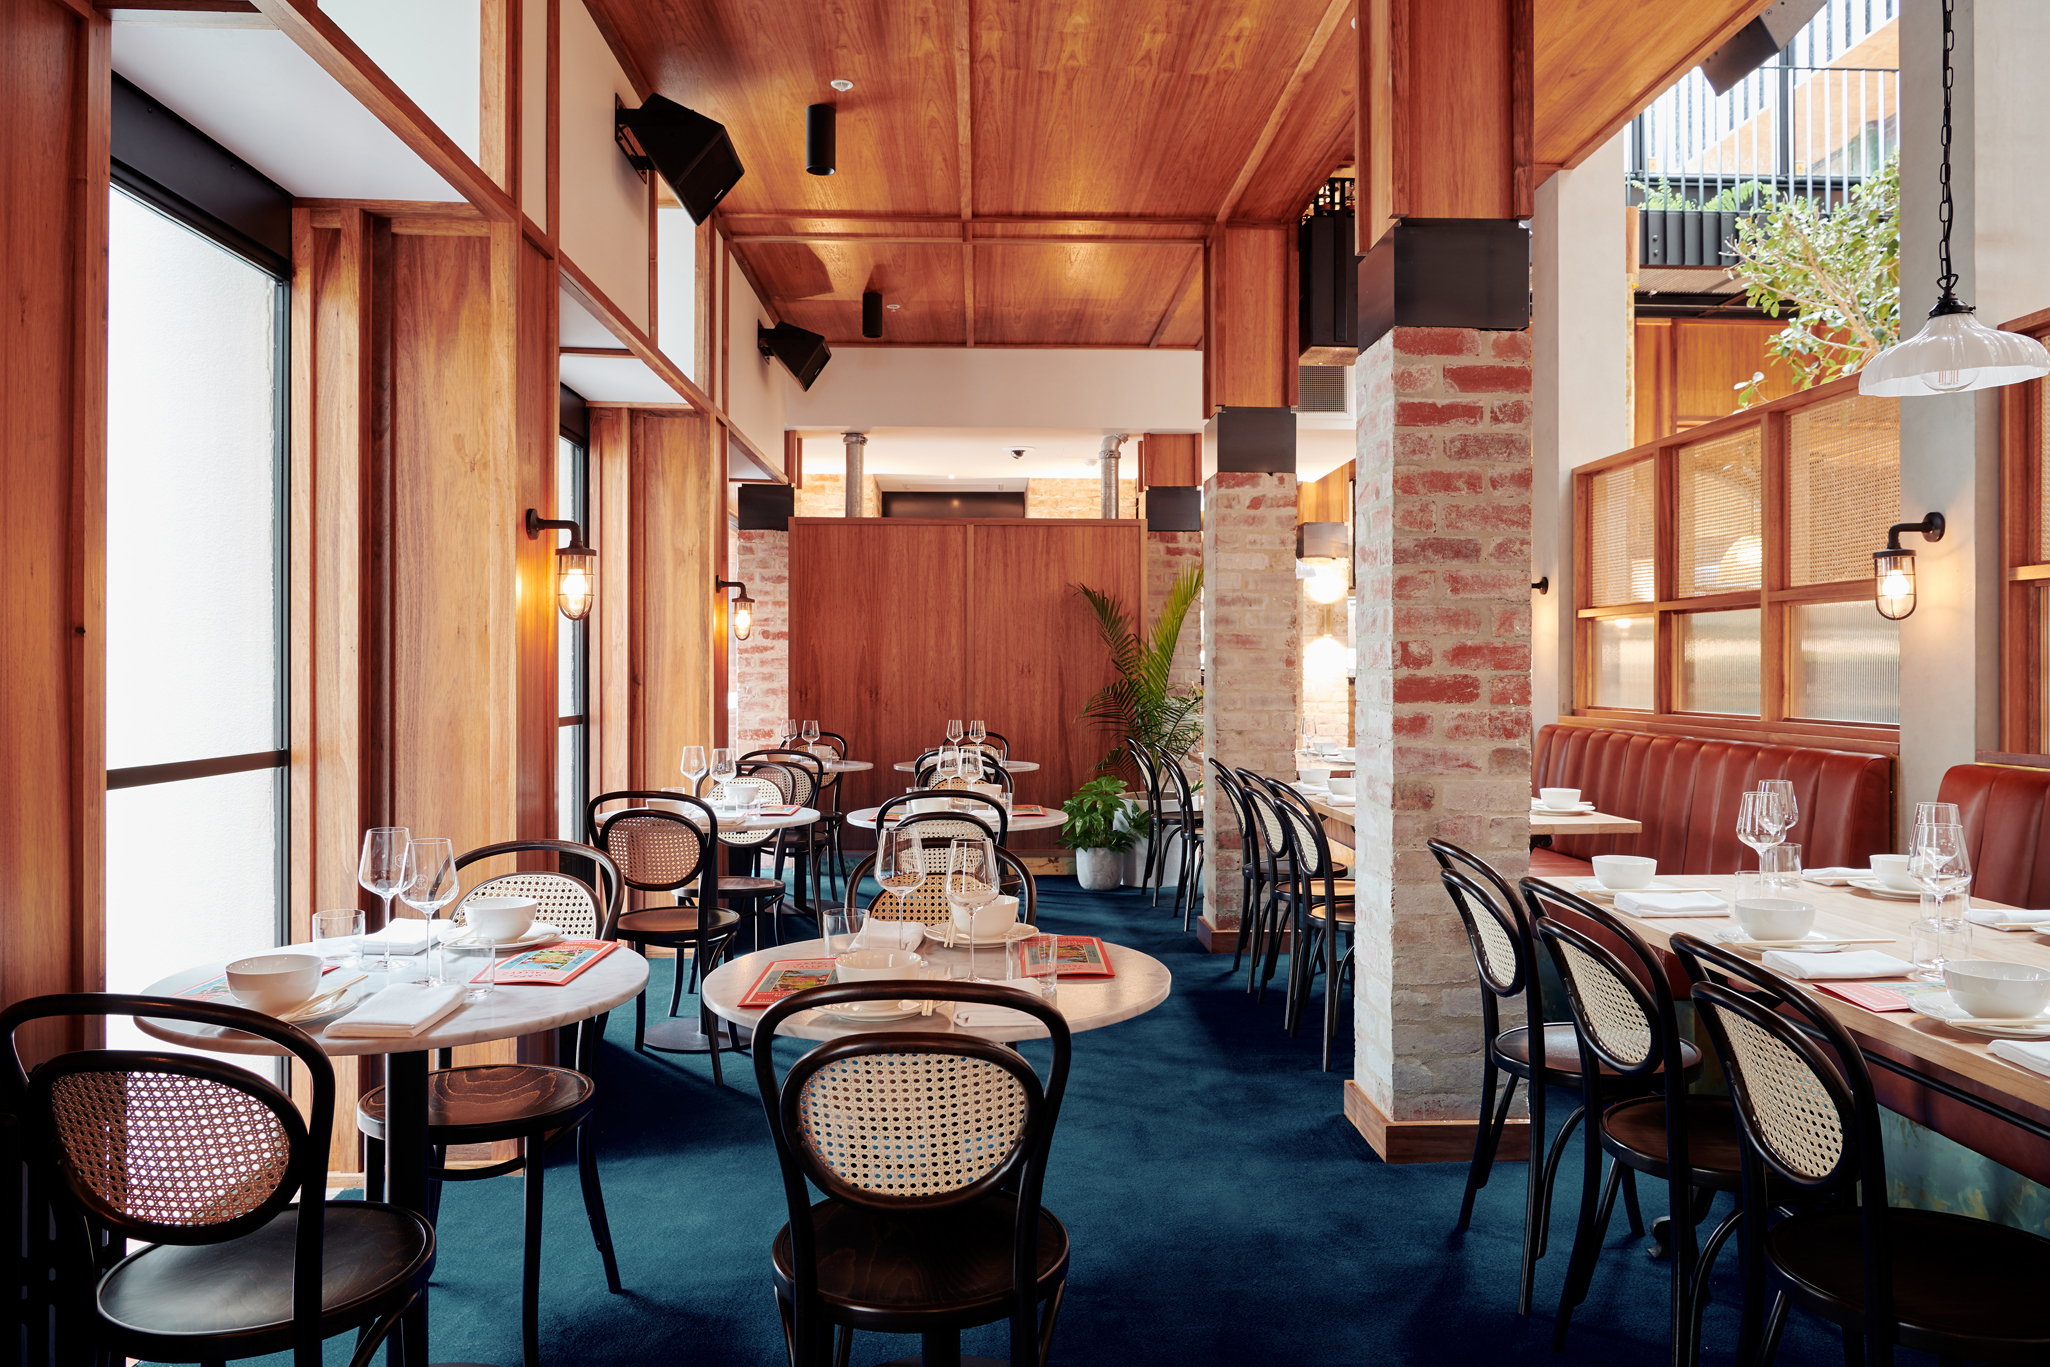 Chinese Restaurants Melbourne